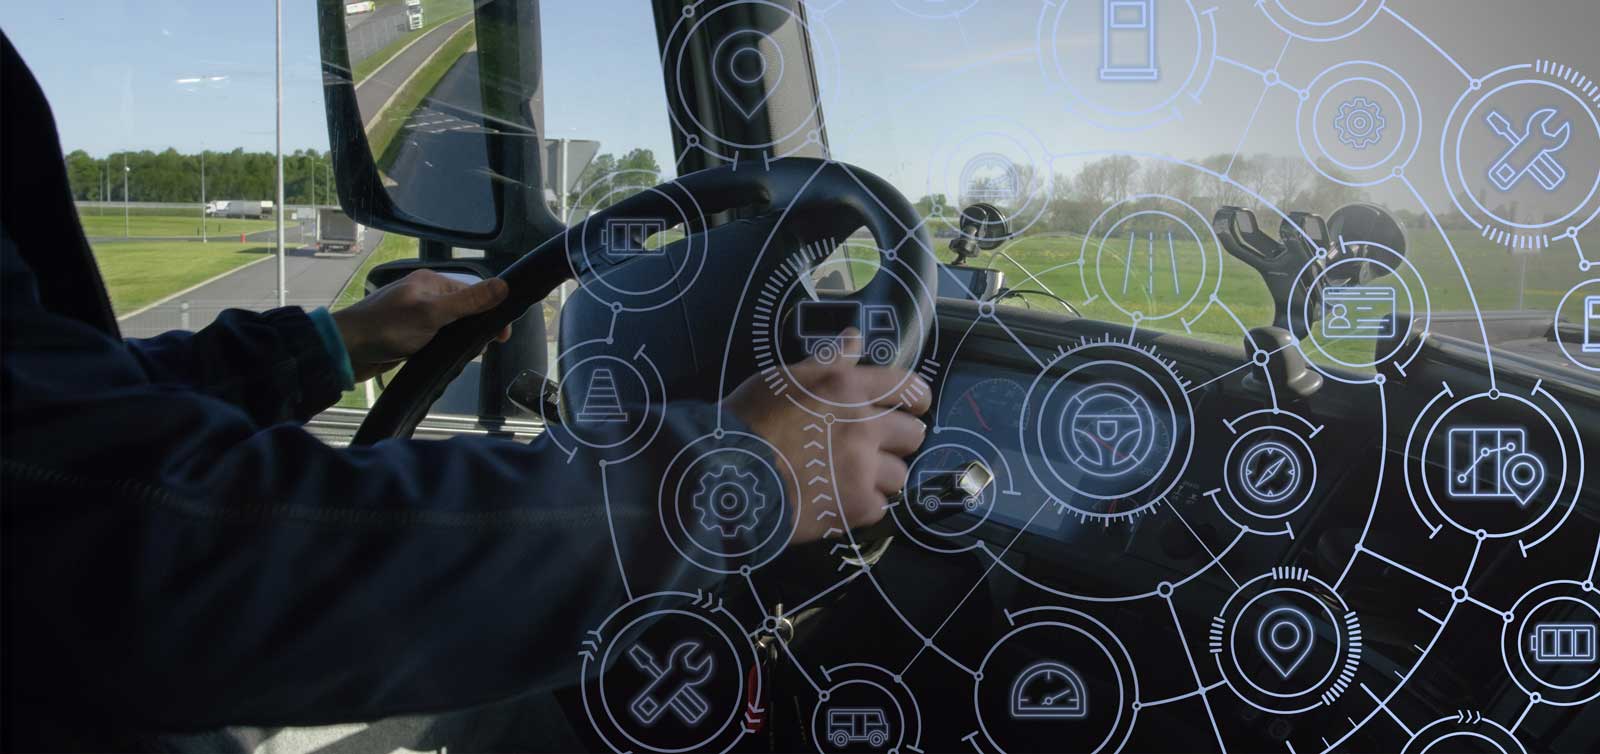 Digital tachograph: the data allrounder